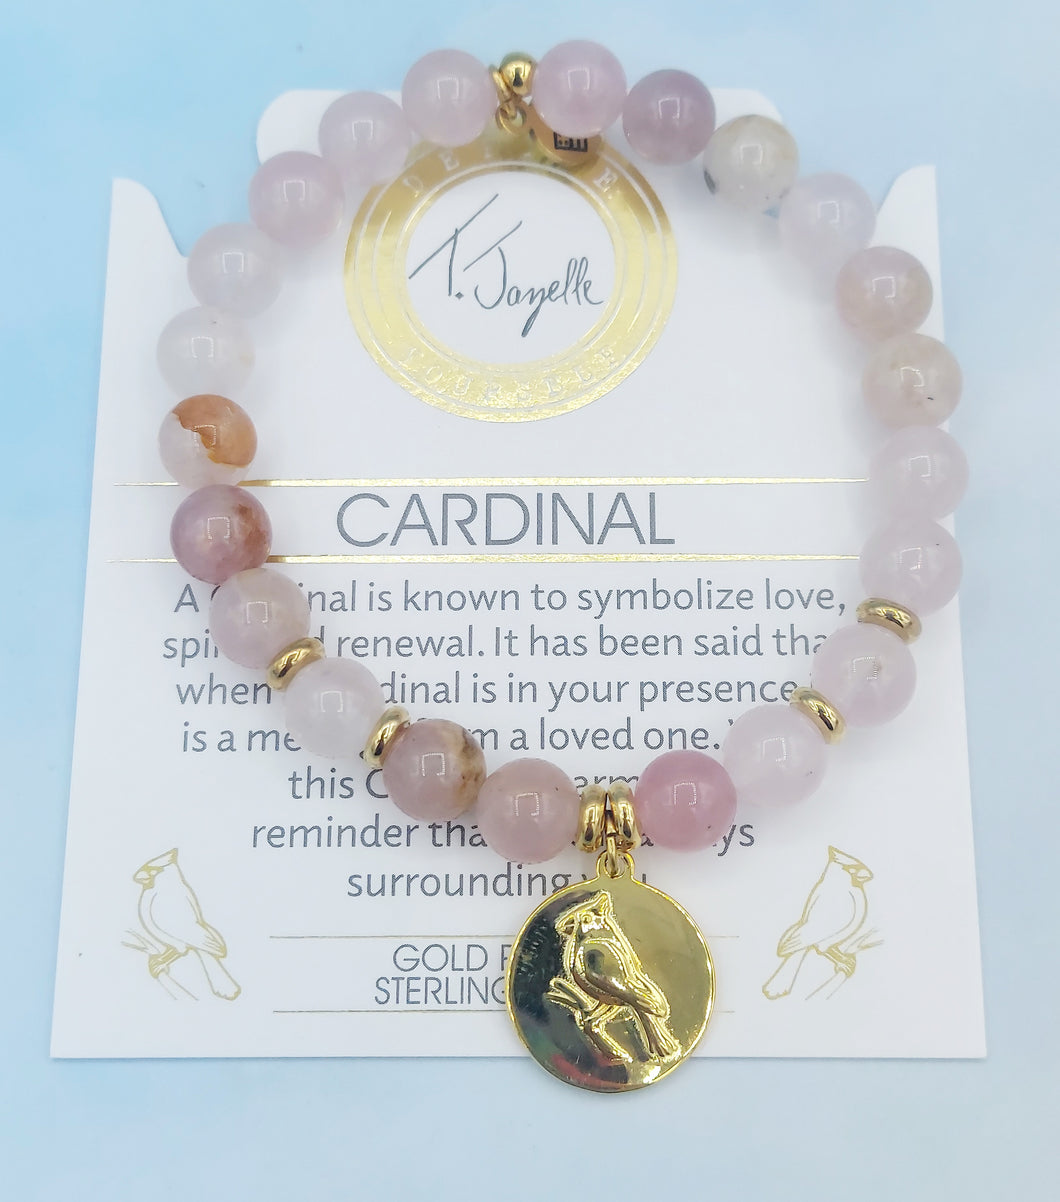 Cardinal Gold Charm Bracelet - TJazelle